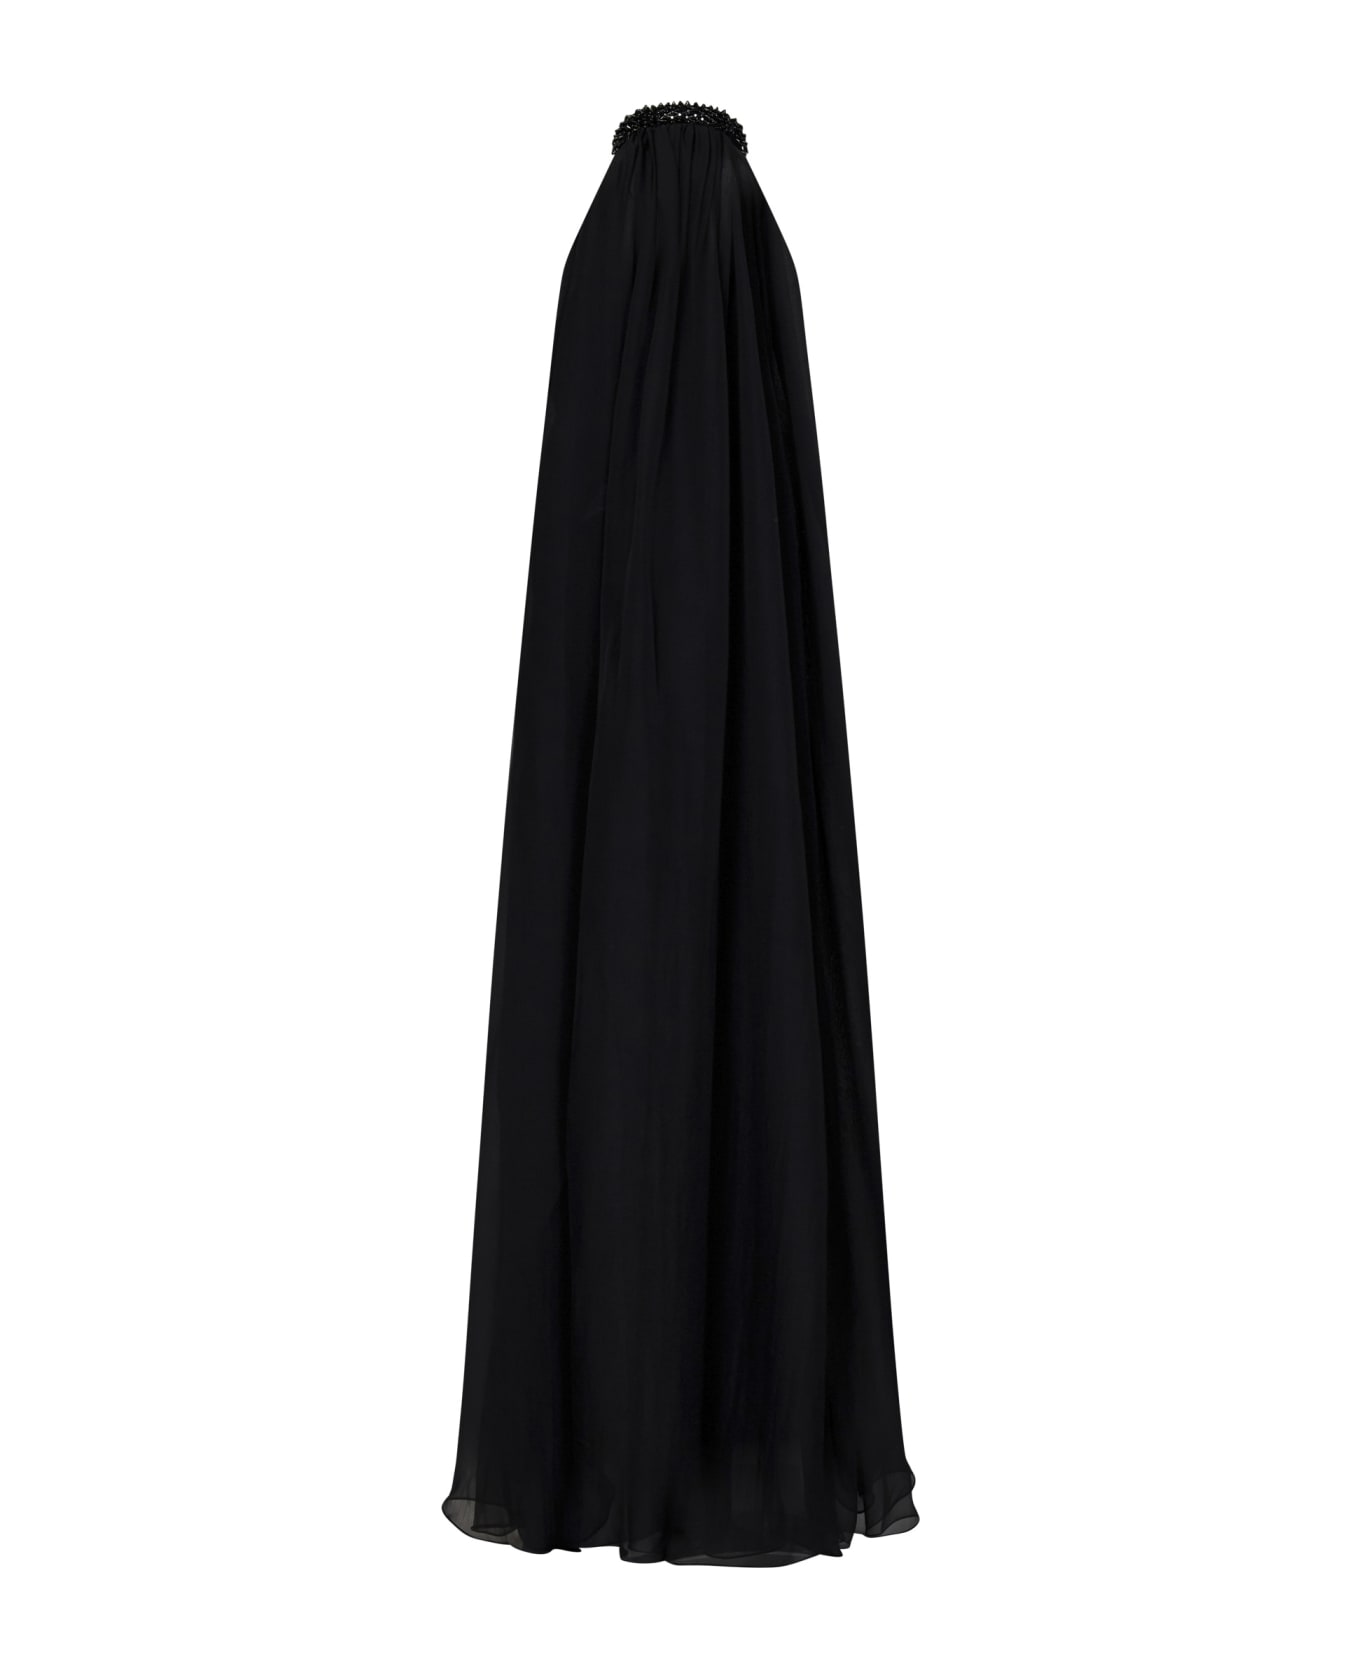 Tom Ford Long Dress - Black